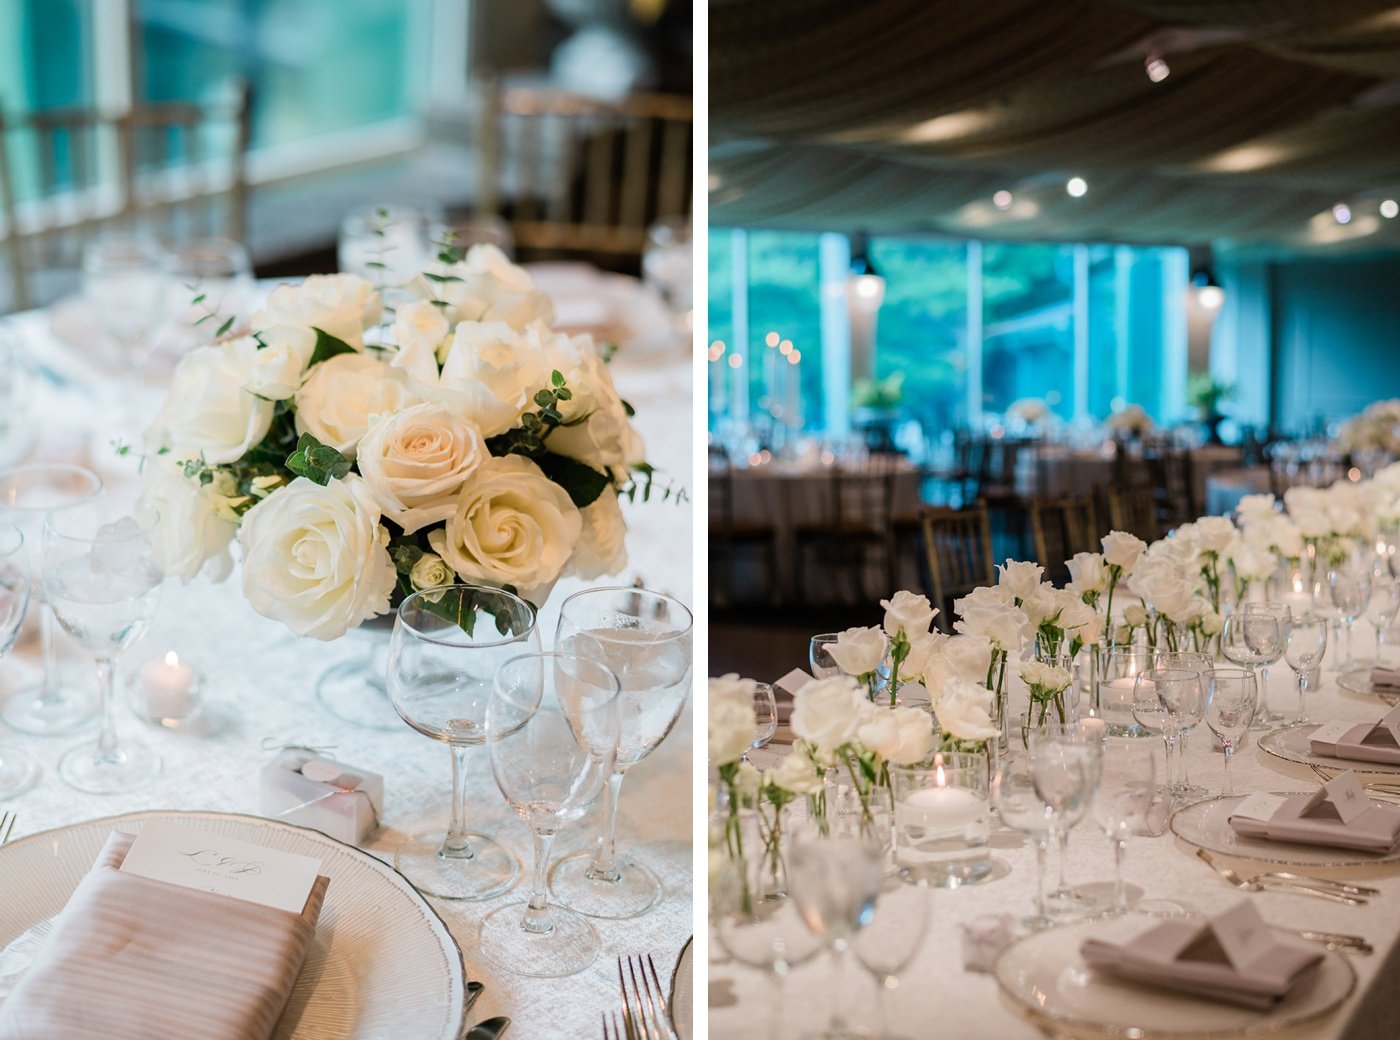 White florals and pastel mauve napkins for a wedding reception